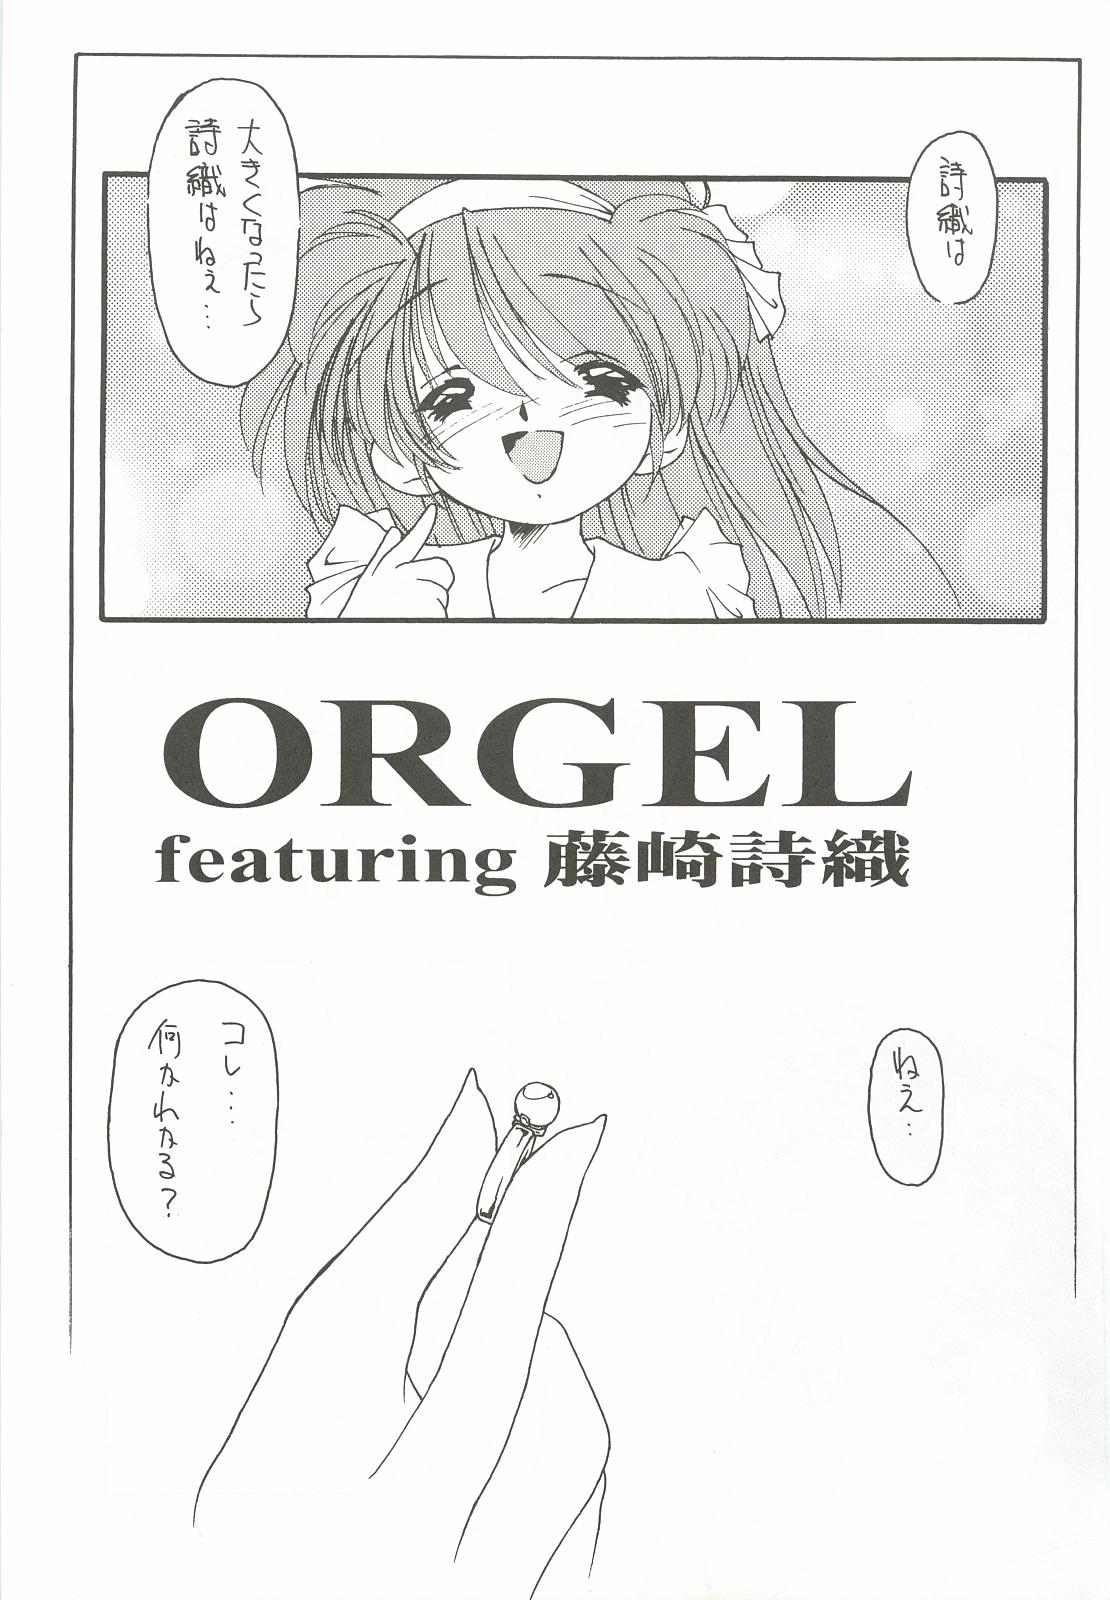 Chichona ORGEL 2 featuring Fujisaki Shiori - Tokimeki memorial Free - Page 8